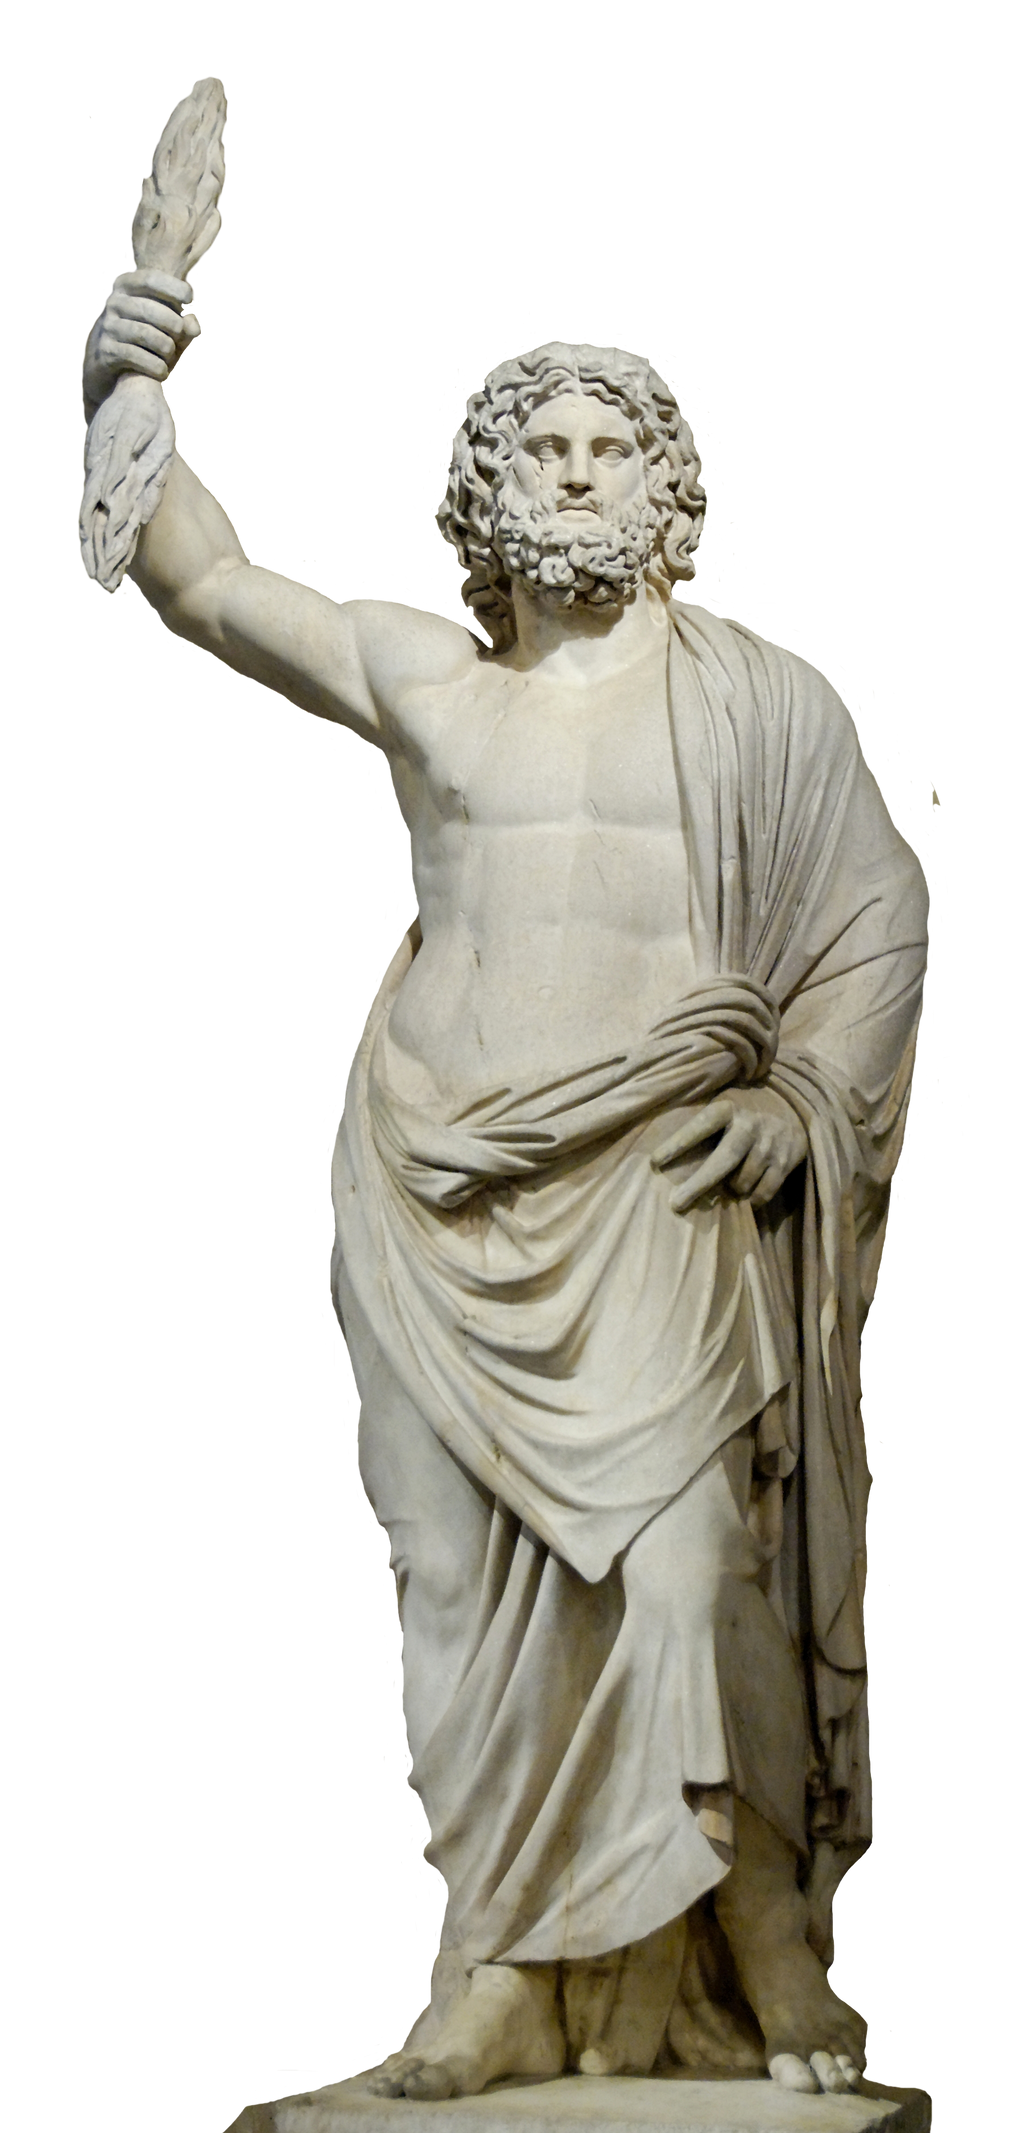 Greece - Statue of Zeus by Ludo38 on DeviantArt